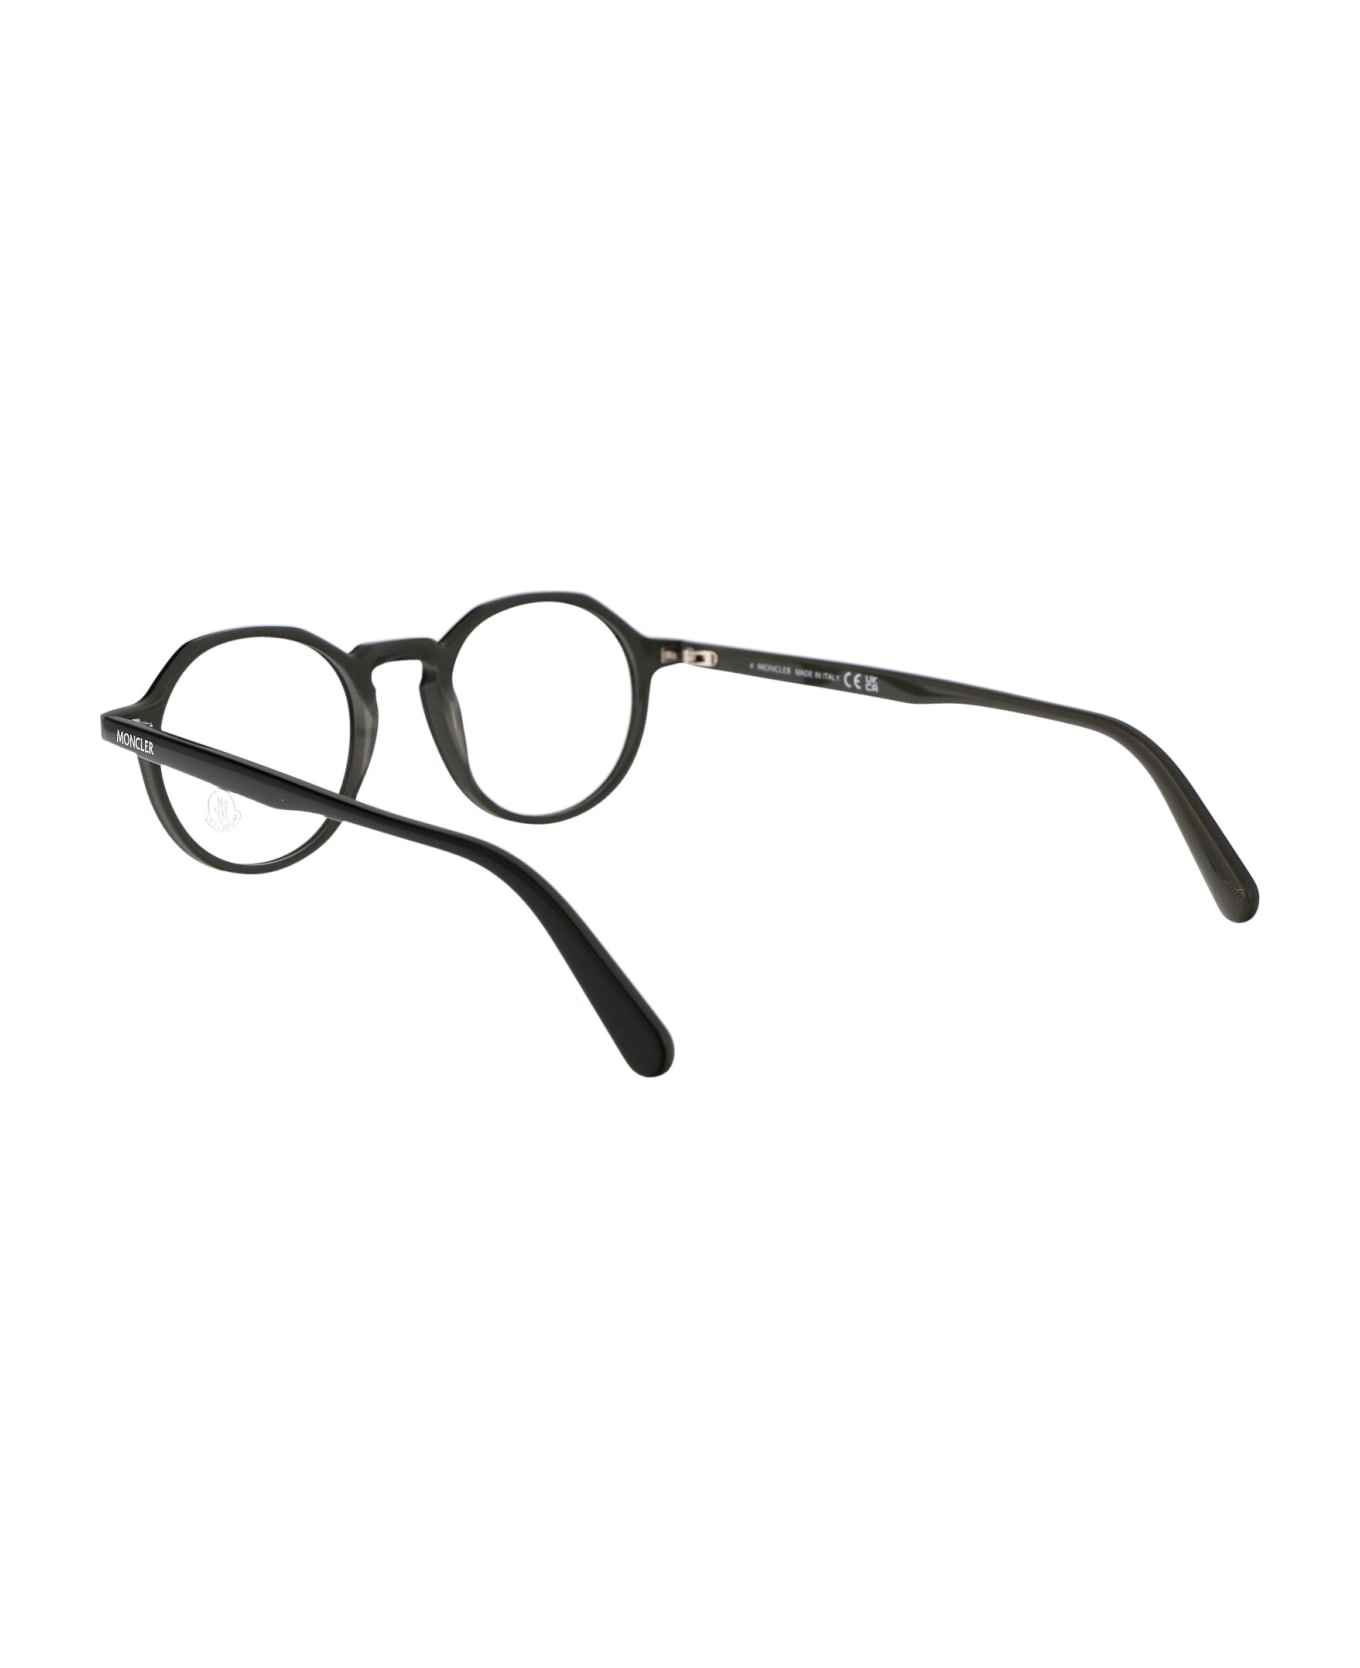 Moncler Eyewear Ml5120 Glasses - 005 Nero/Monocolore